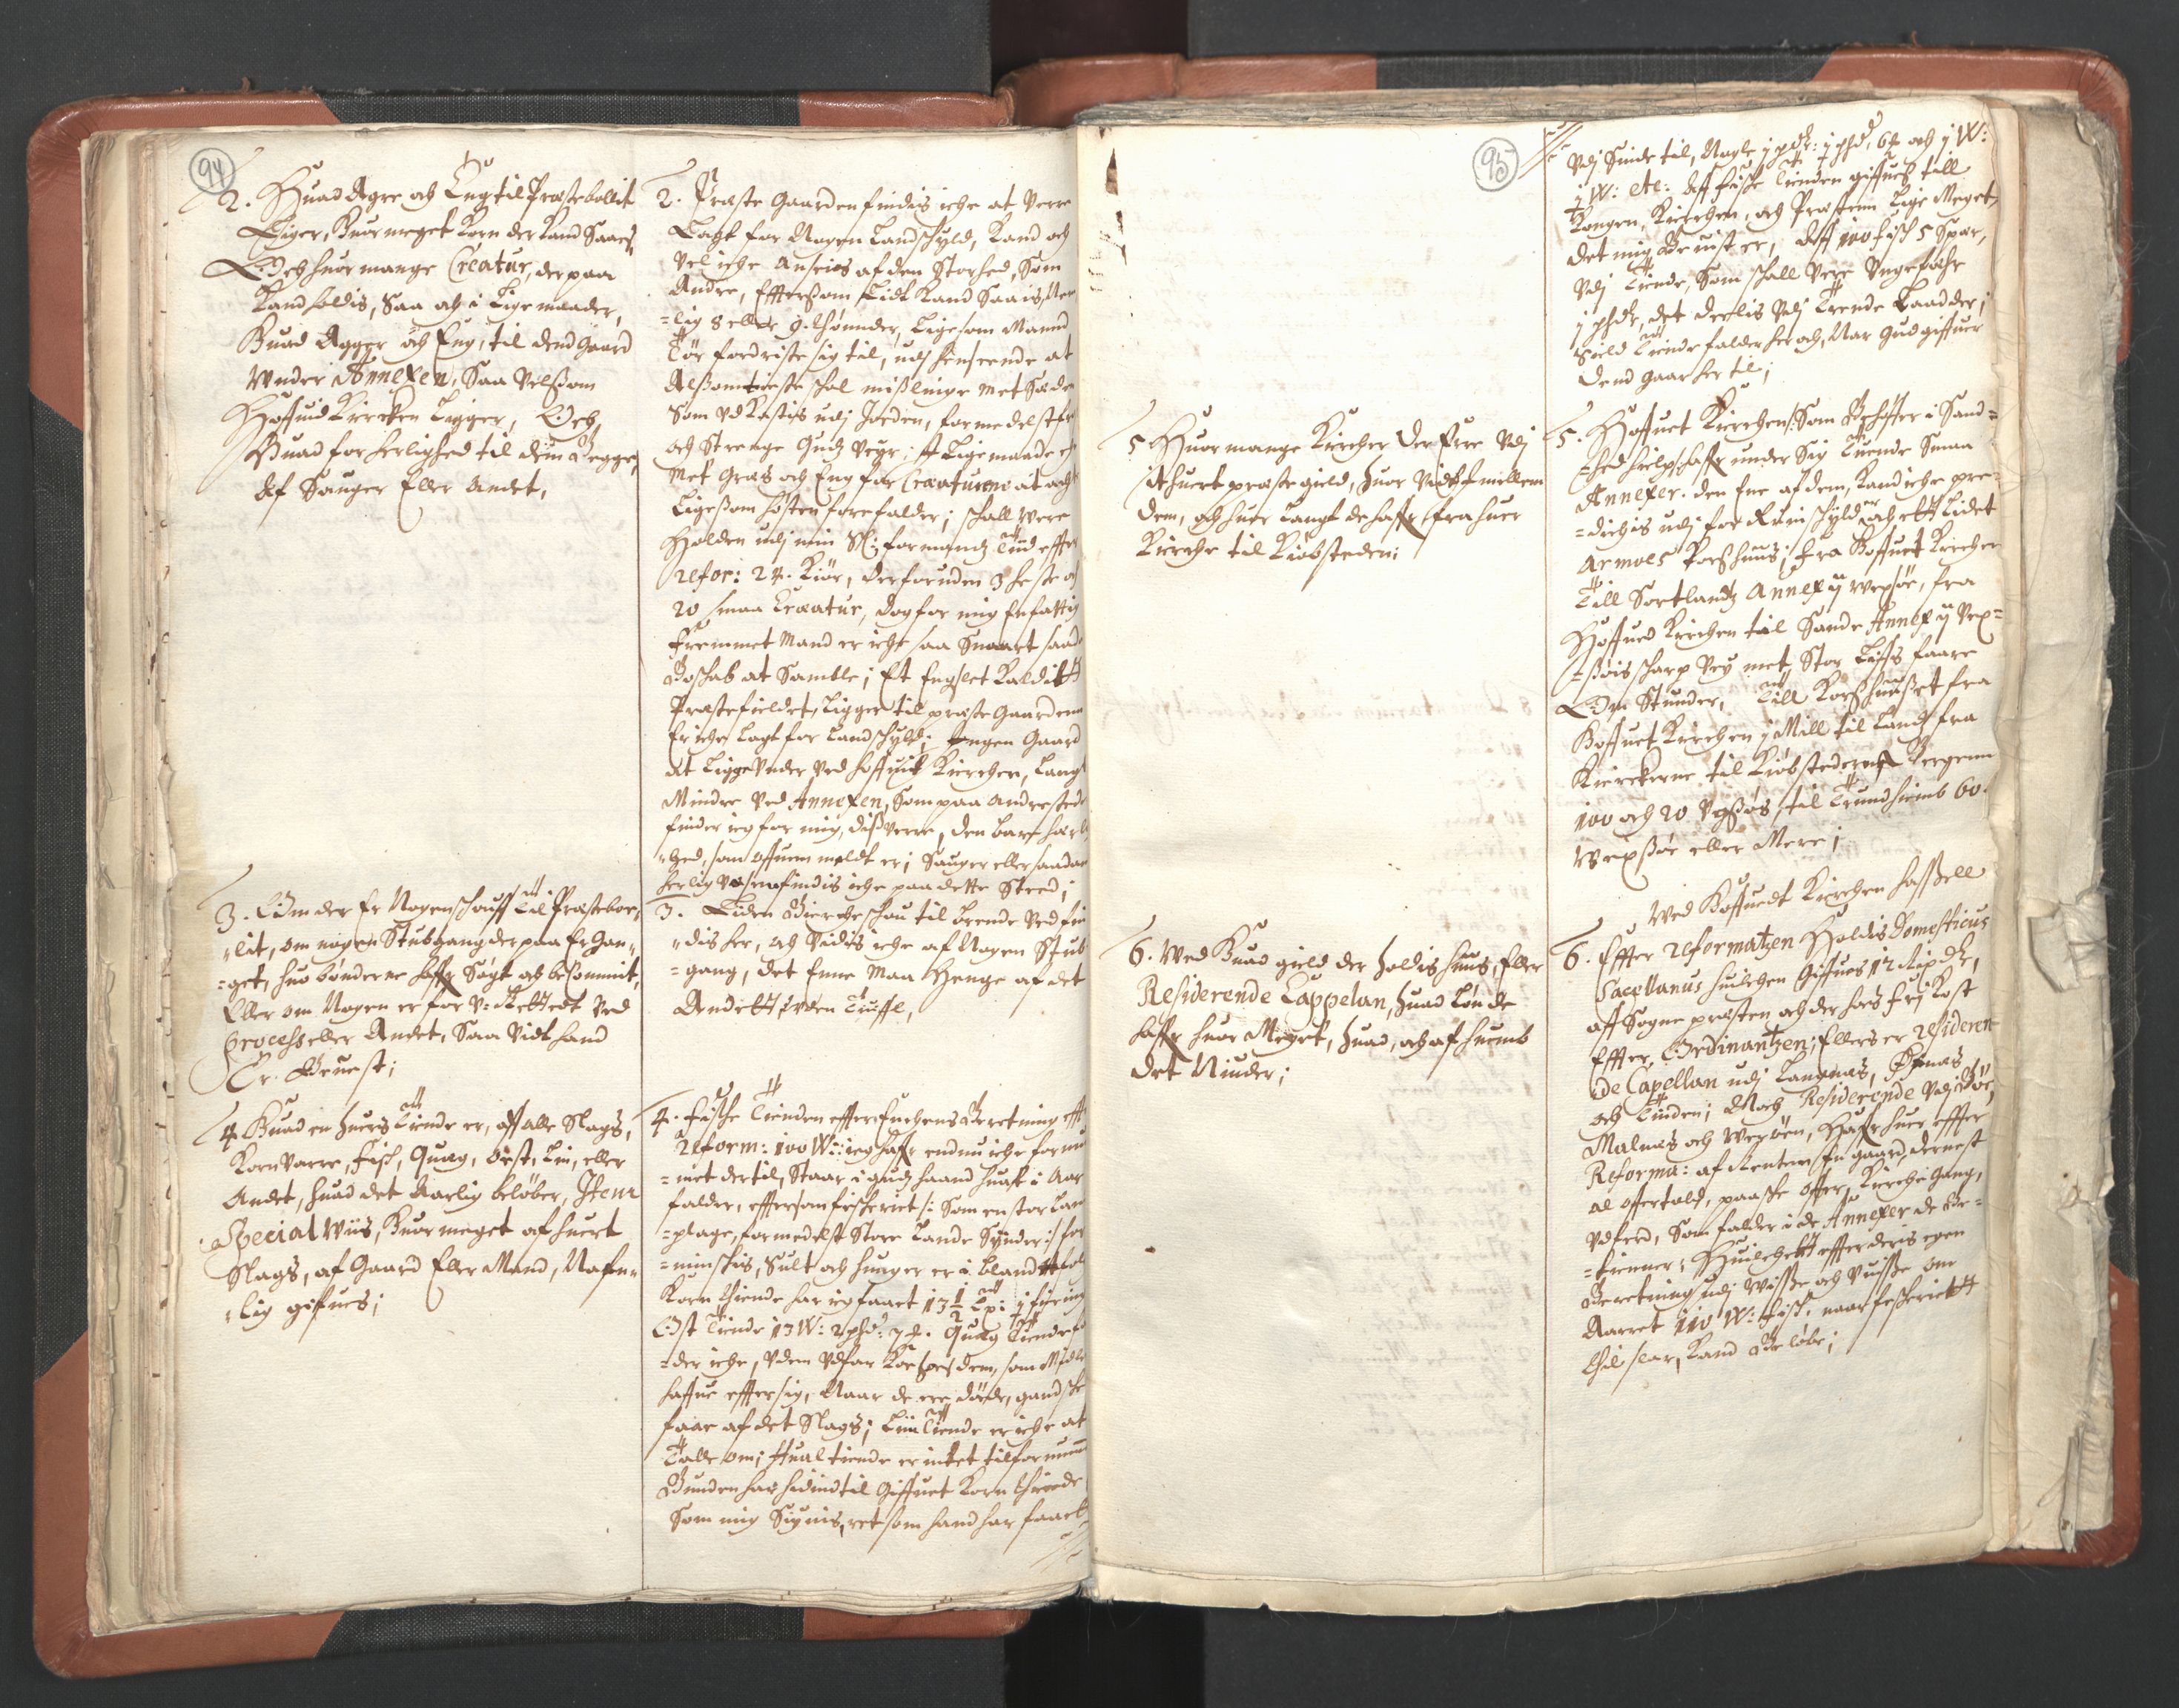 RA, Vicar's Census 1664-1666, no. 36: Lofoten and Vesterålen deanery, Senja deanery and Troms deanery, 1664-1666, p. 94-95